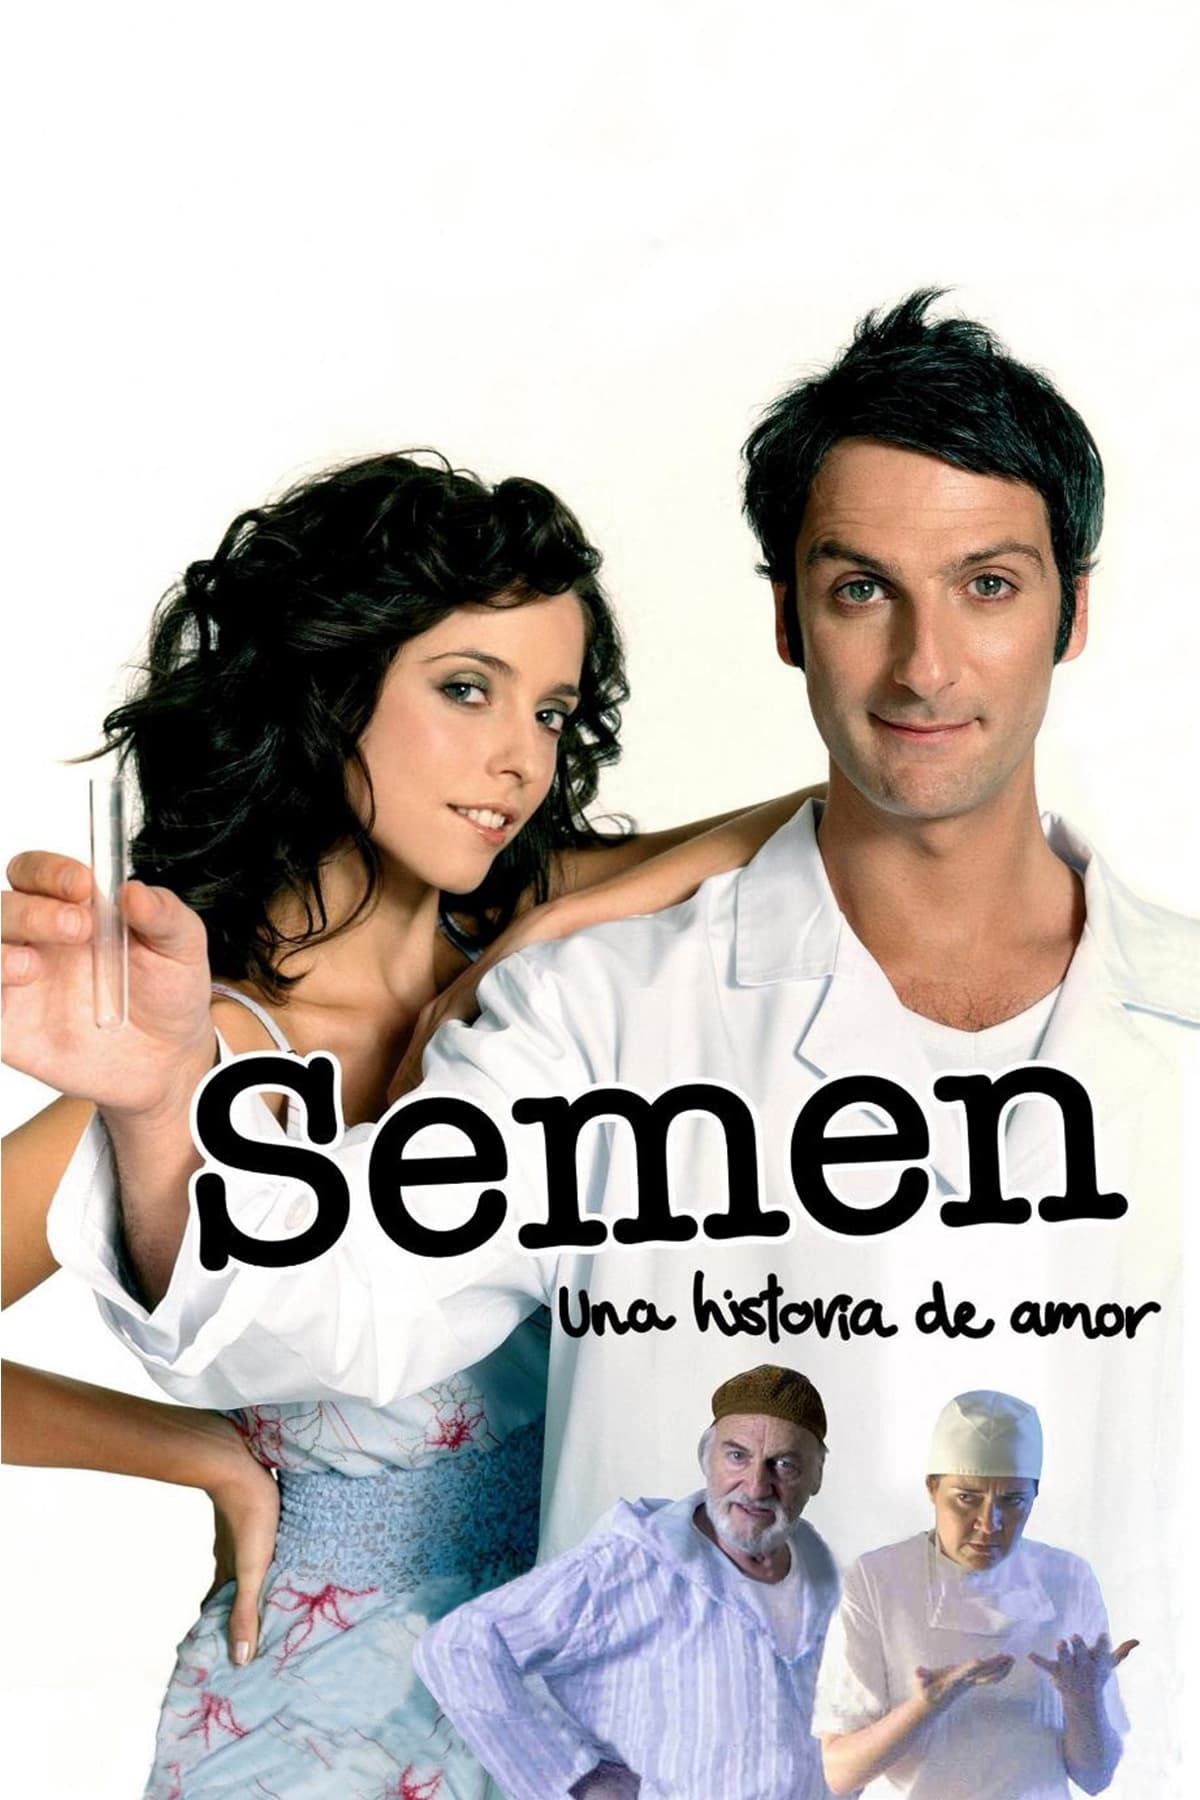 Semen, a Love Sample